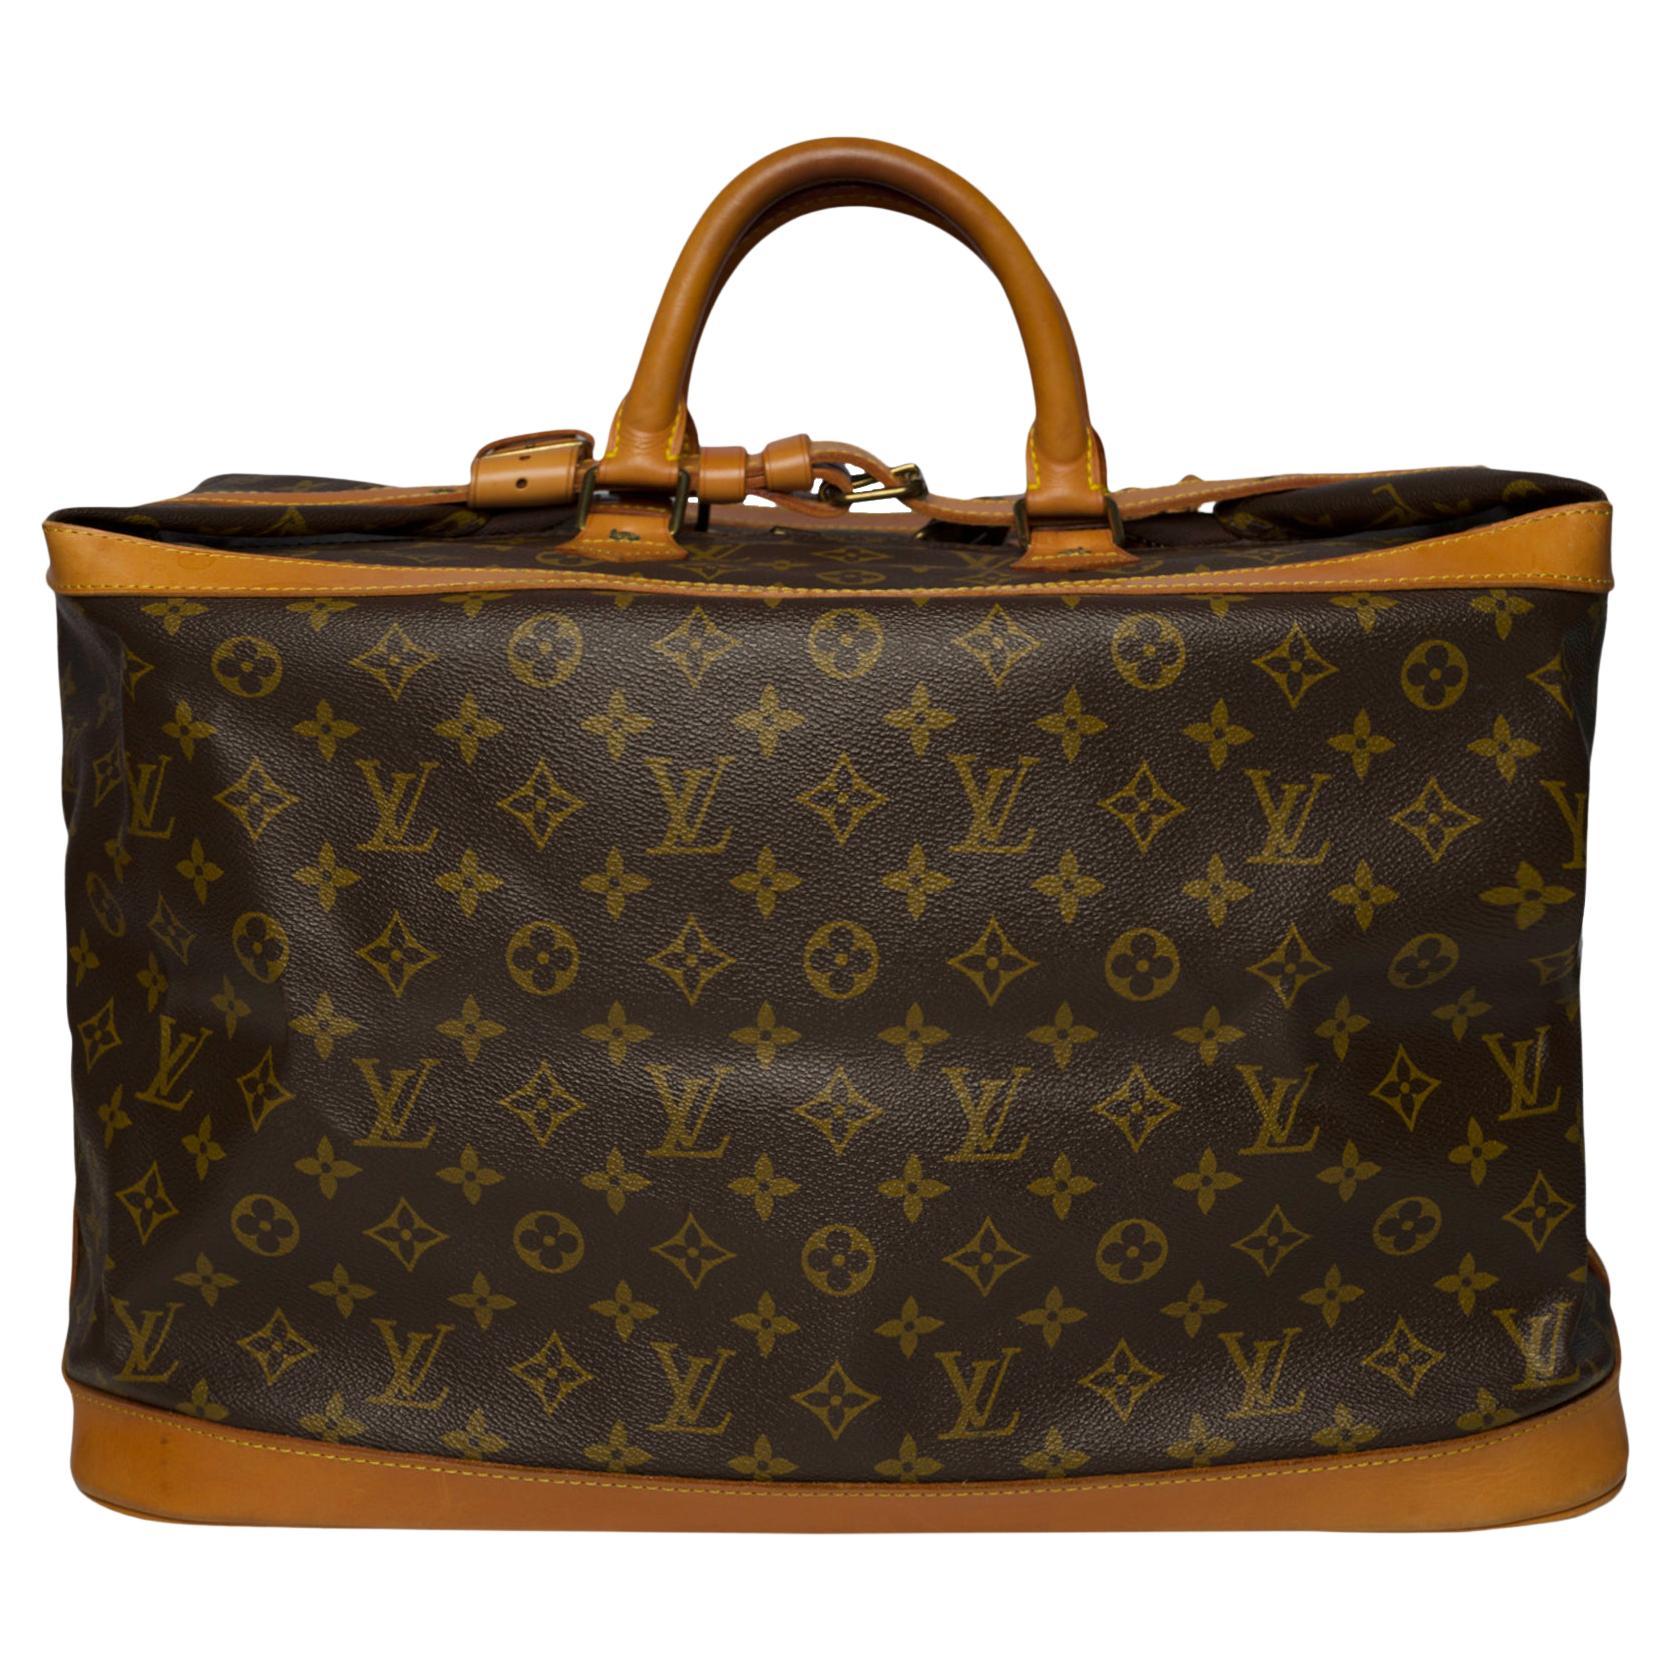 Rare Louis Vuitton 'Cruiser" Travel bag in brown Monogram canvas, gold hardware